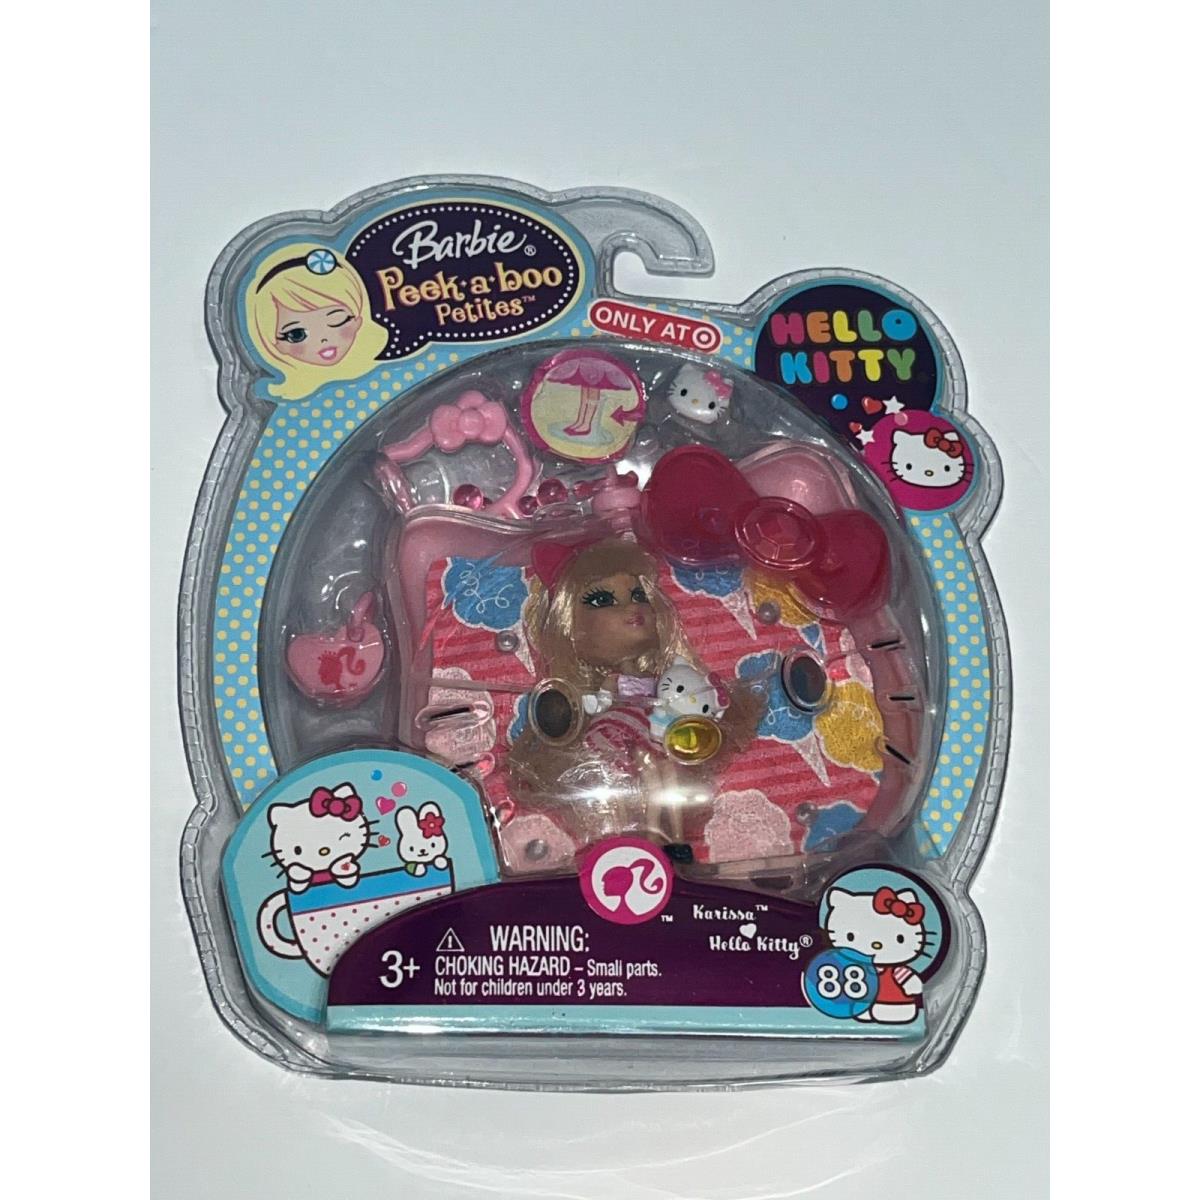 Barbie Peek-a-boo Petites 88 Hello Kitty 2008 Karissa Target Exclusive